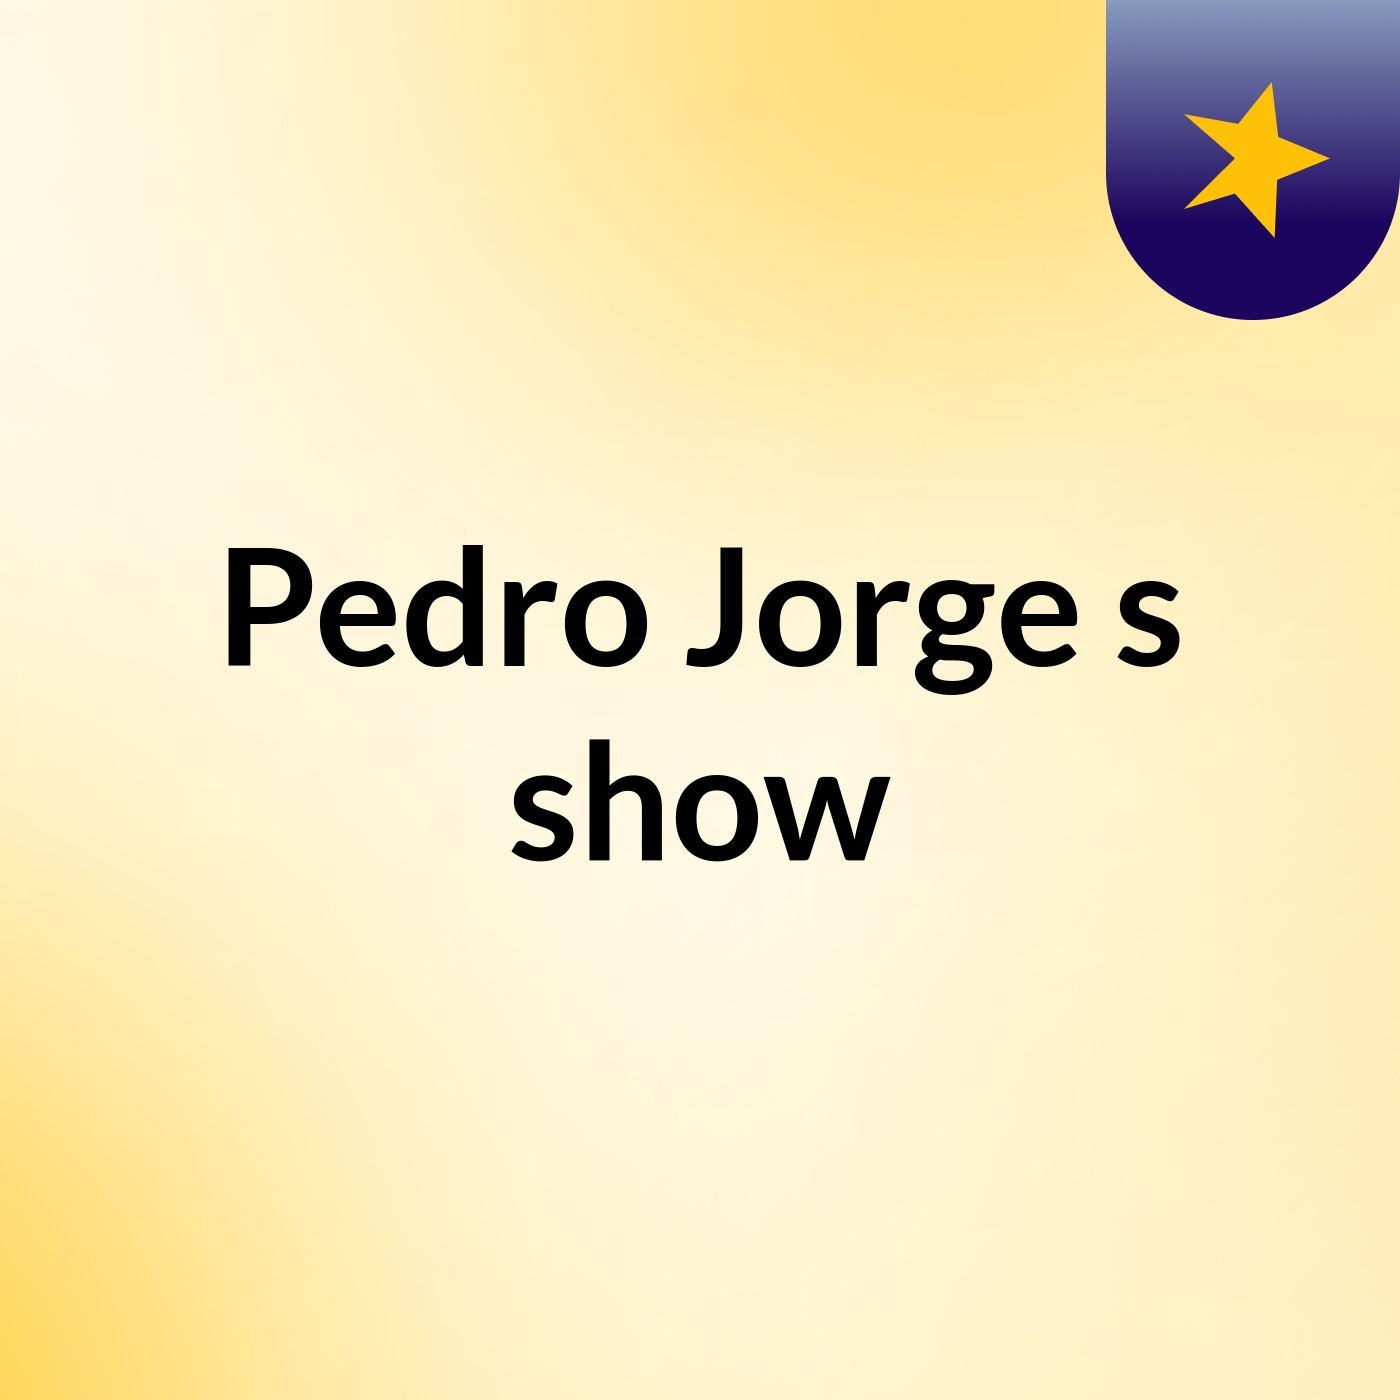 Pedro Jorge's show